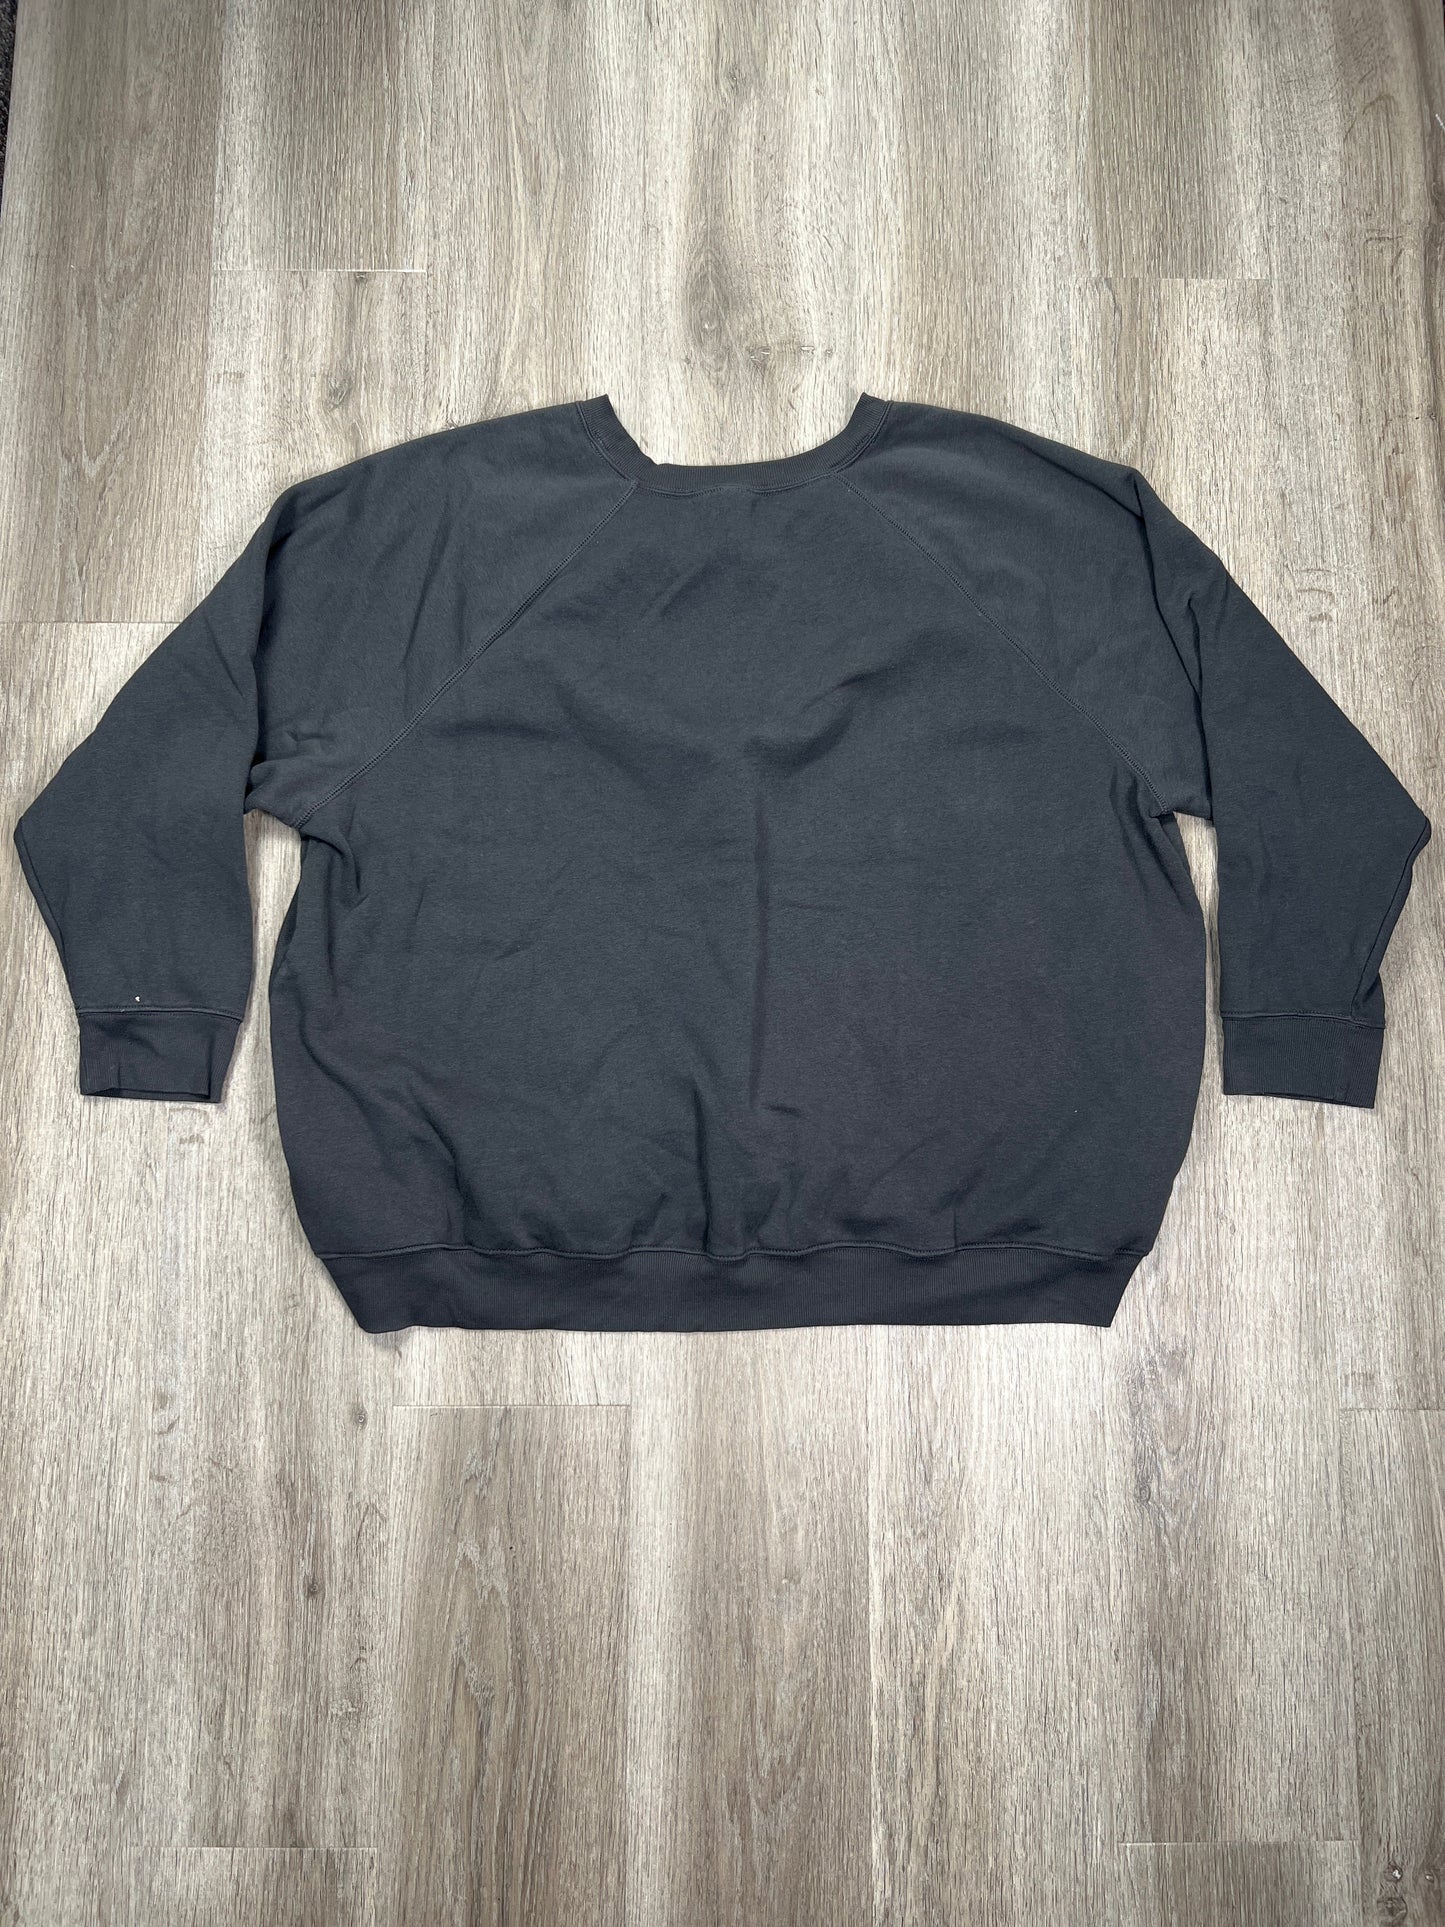 Grey Sweatshirt Crewneck Old Navy, Size 4x